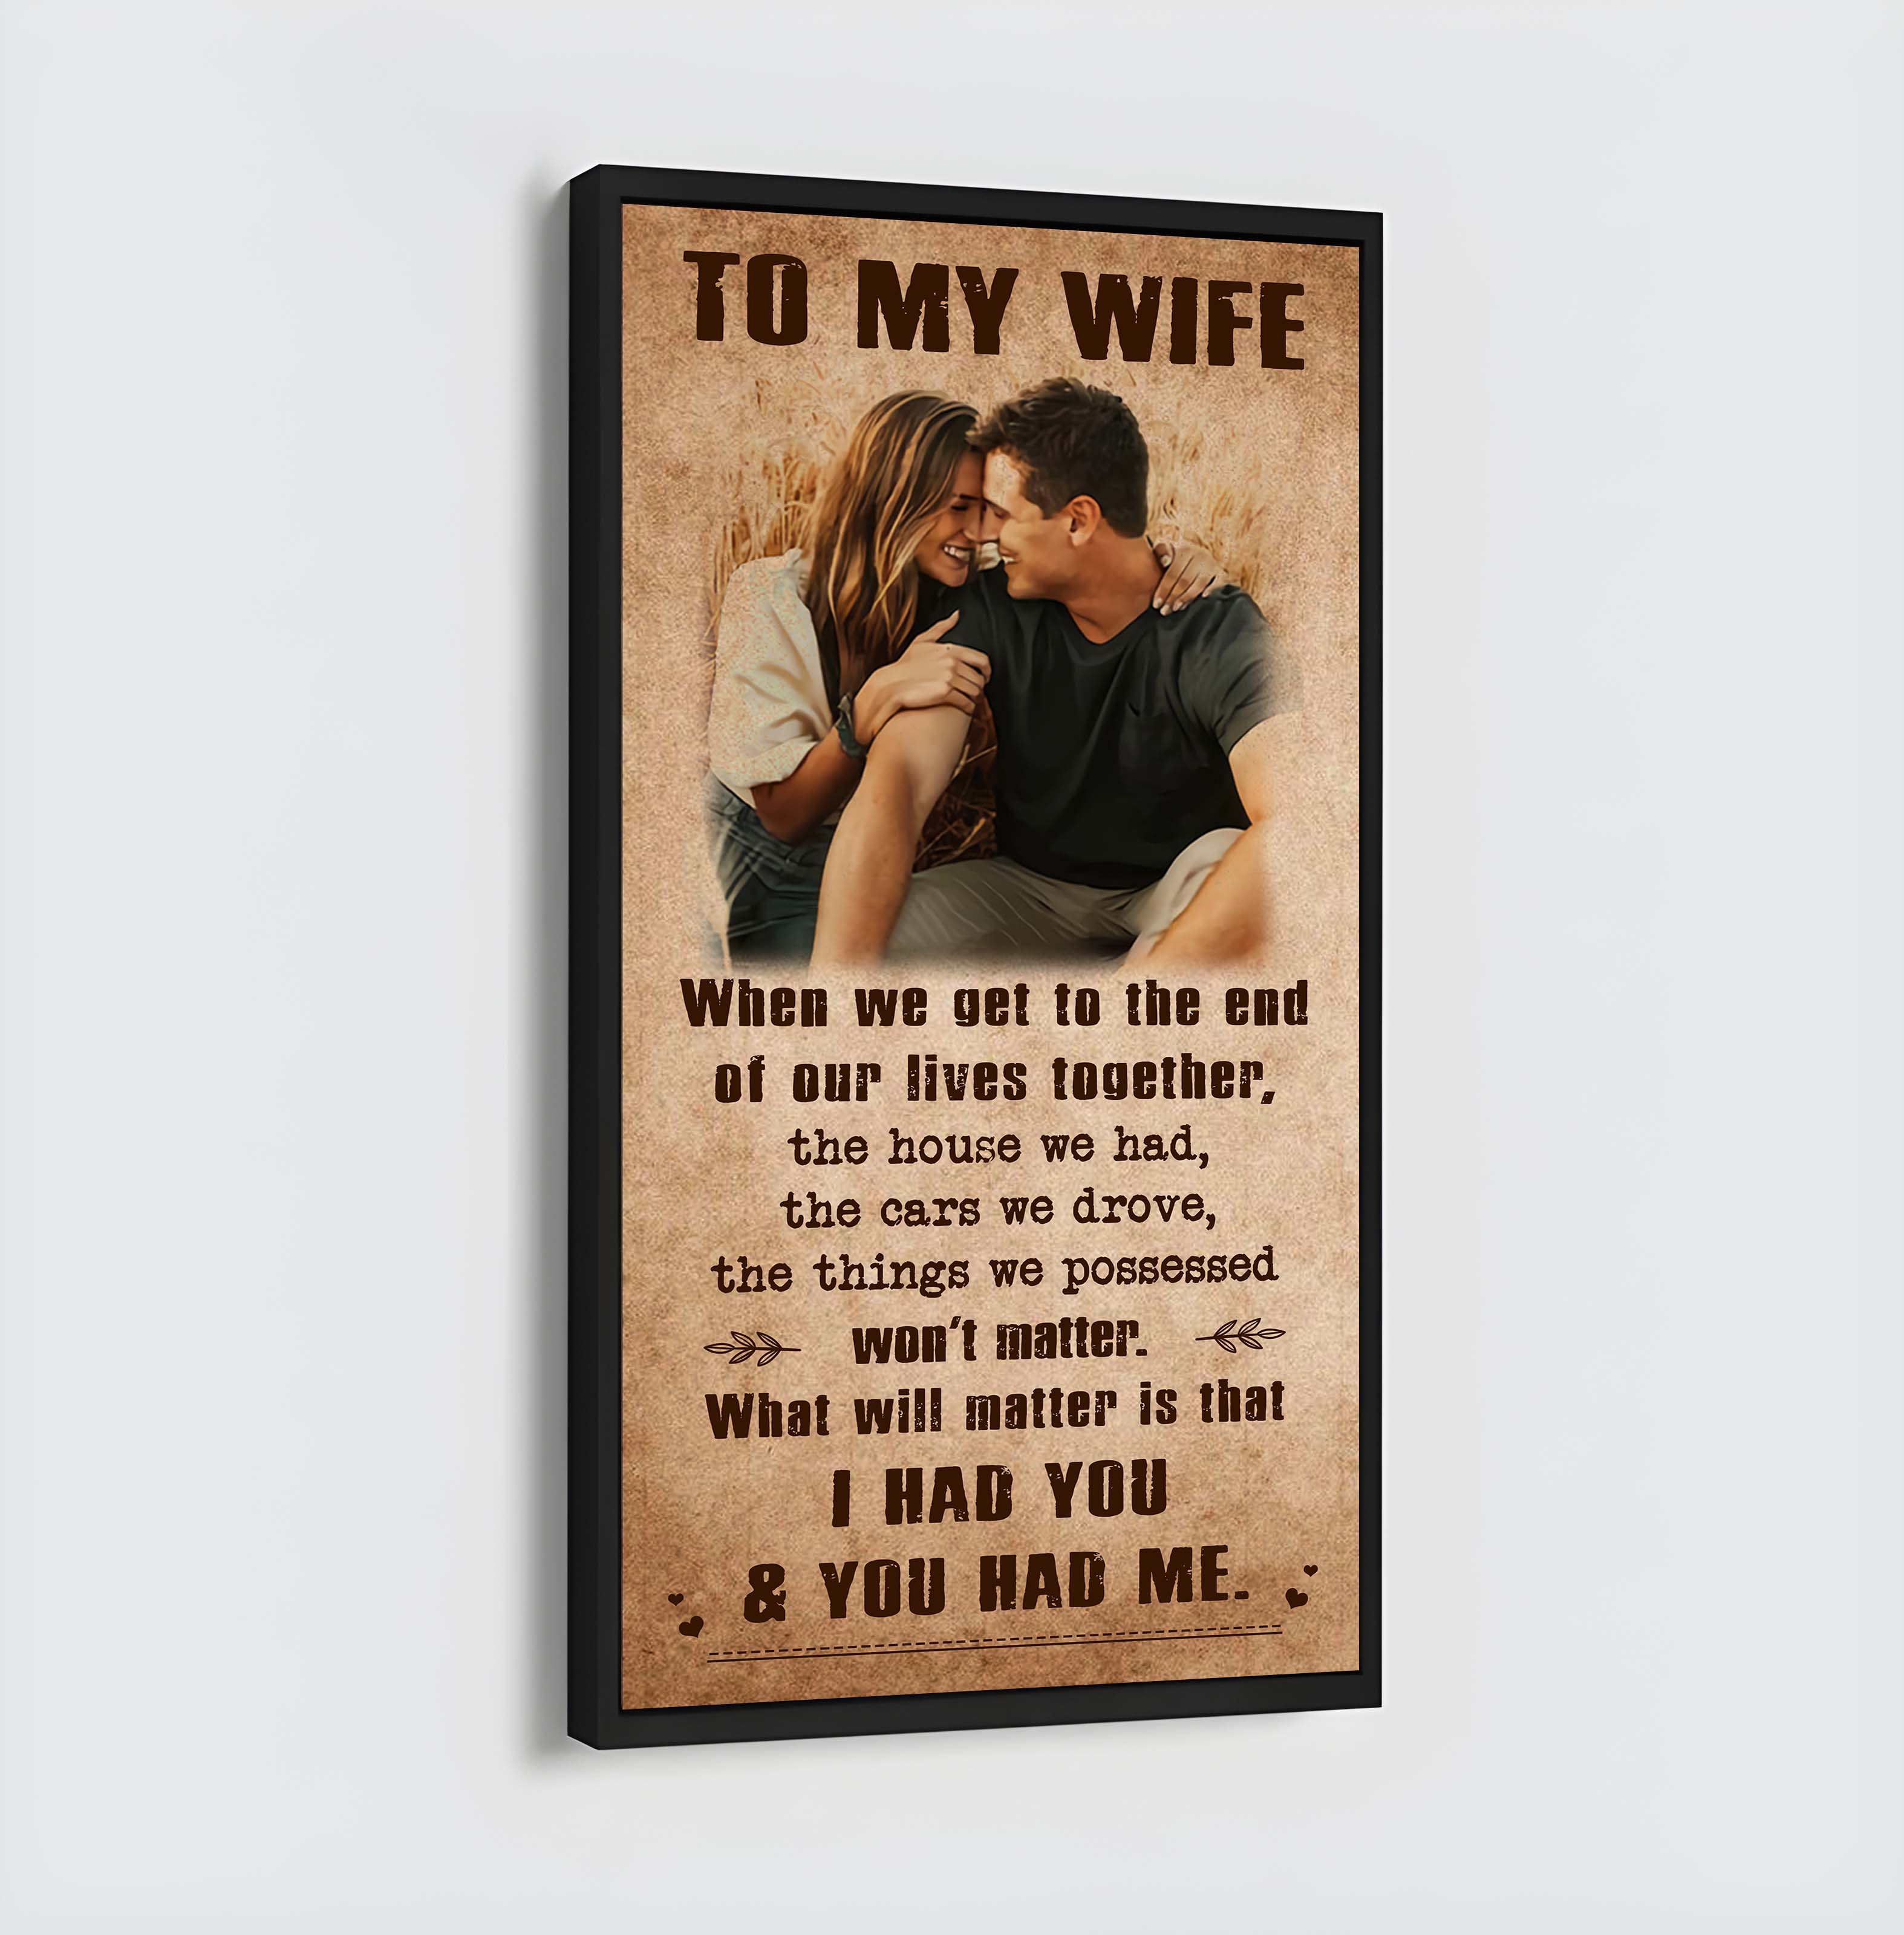 Valentine gifts-Custom image canvas-Husband to Wife- I wish I could turn back the clock